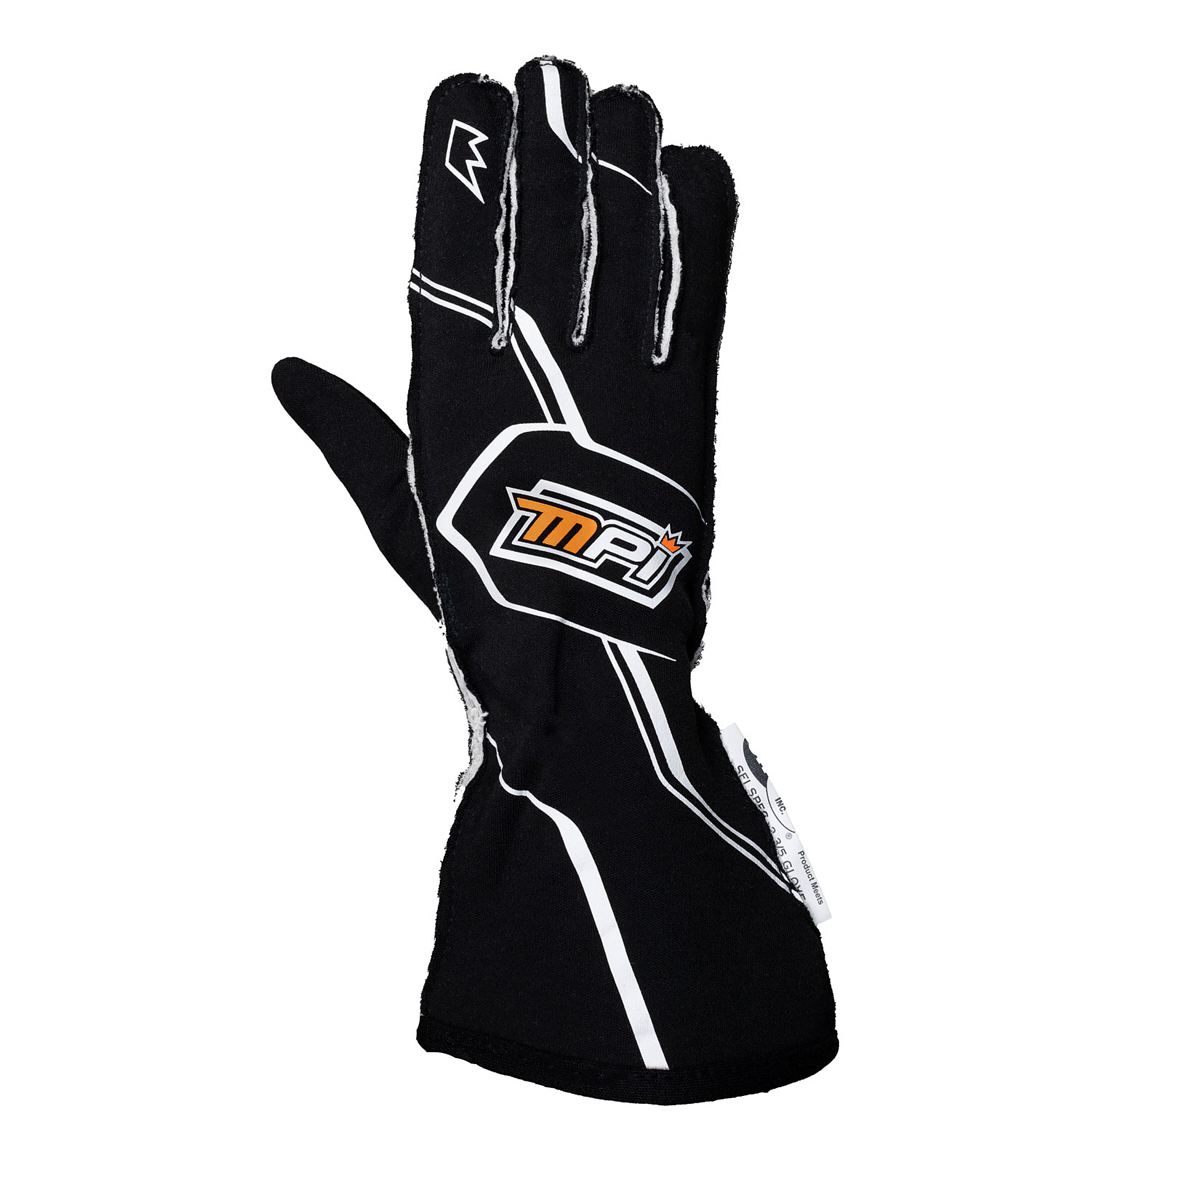 MPI USA MPI-GL-B-XS - Gloves, Driving, SFI 3.3/5, Double Layer, Nomex, Padded Palm, Black / White, X-Small, Pair